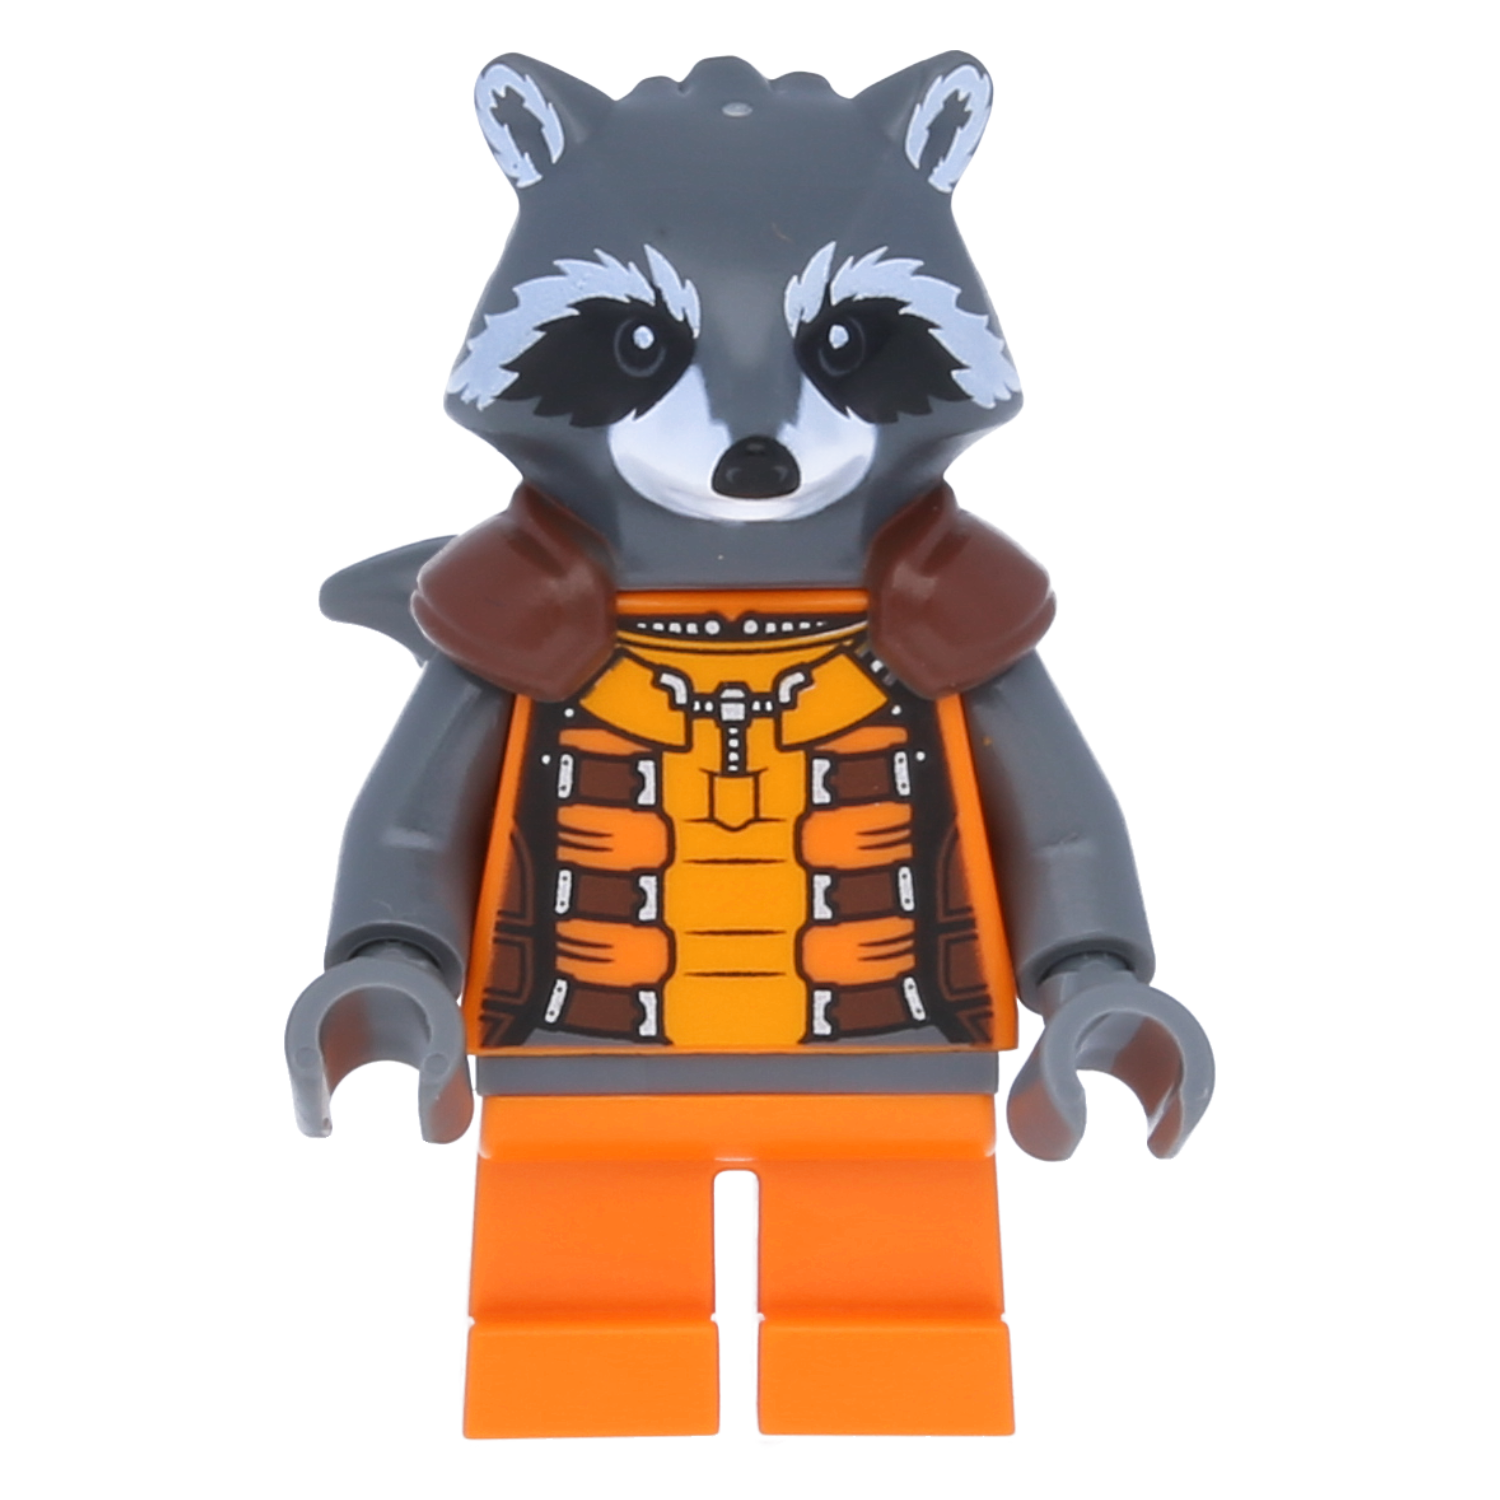 LEGO superhero mini figure - Rocket Raccoon (Oranges Outfit)